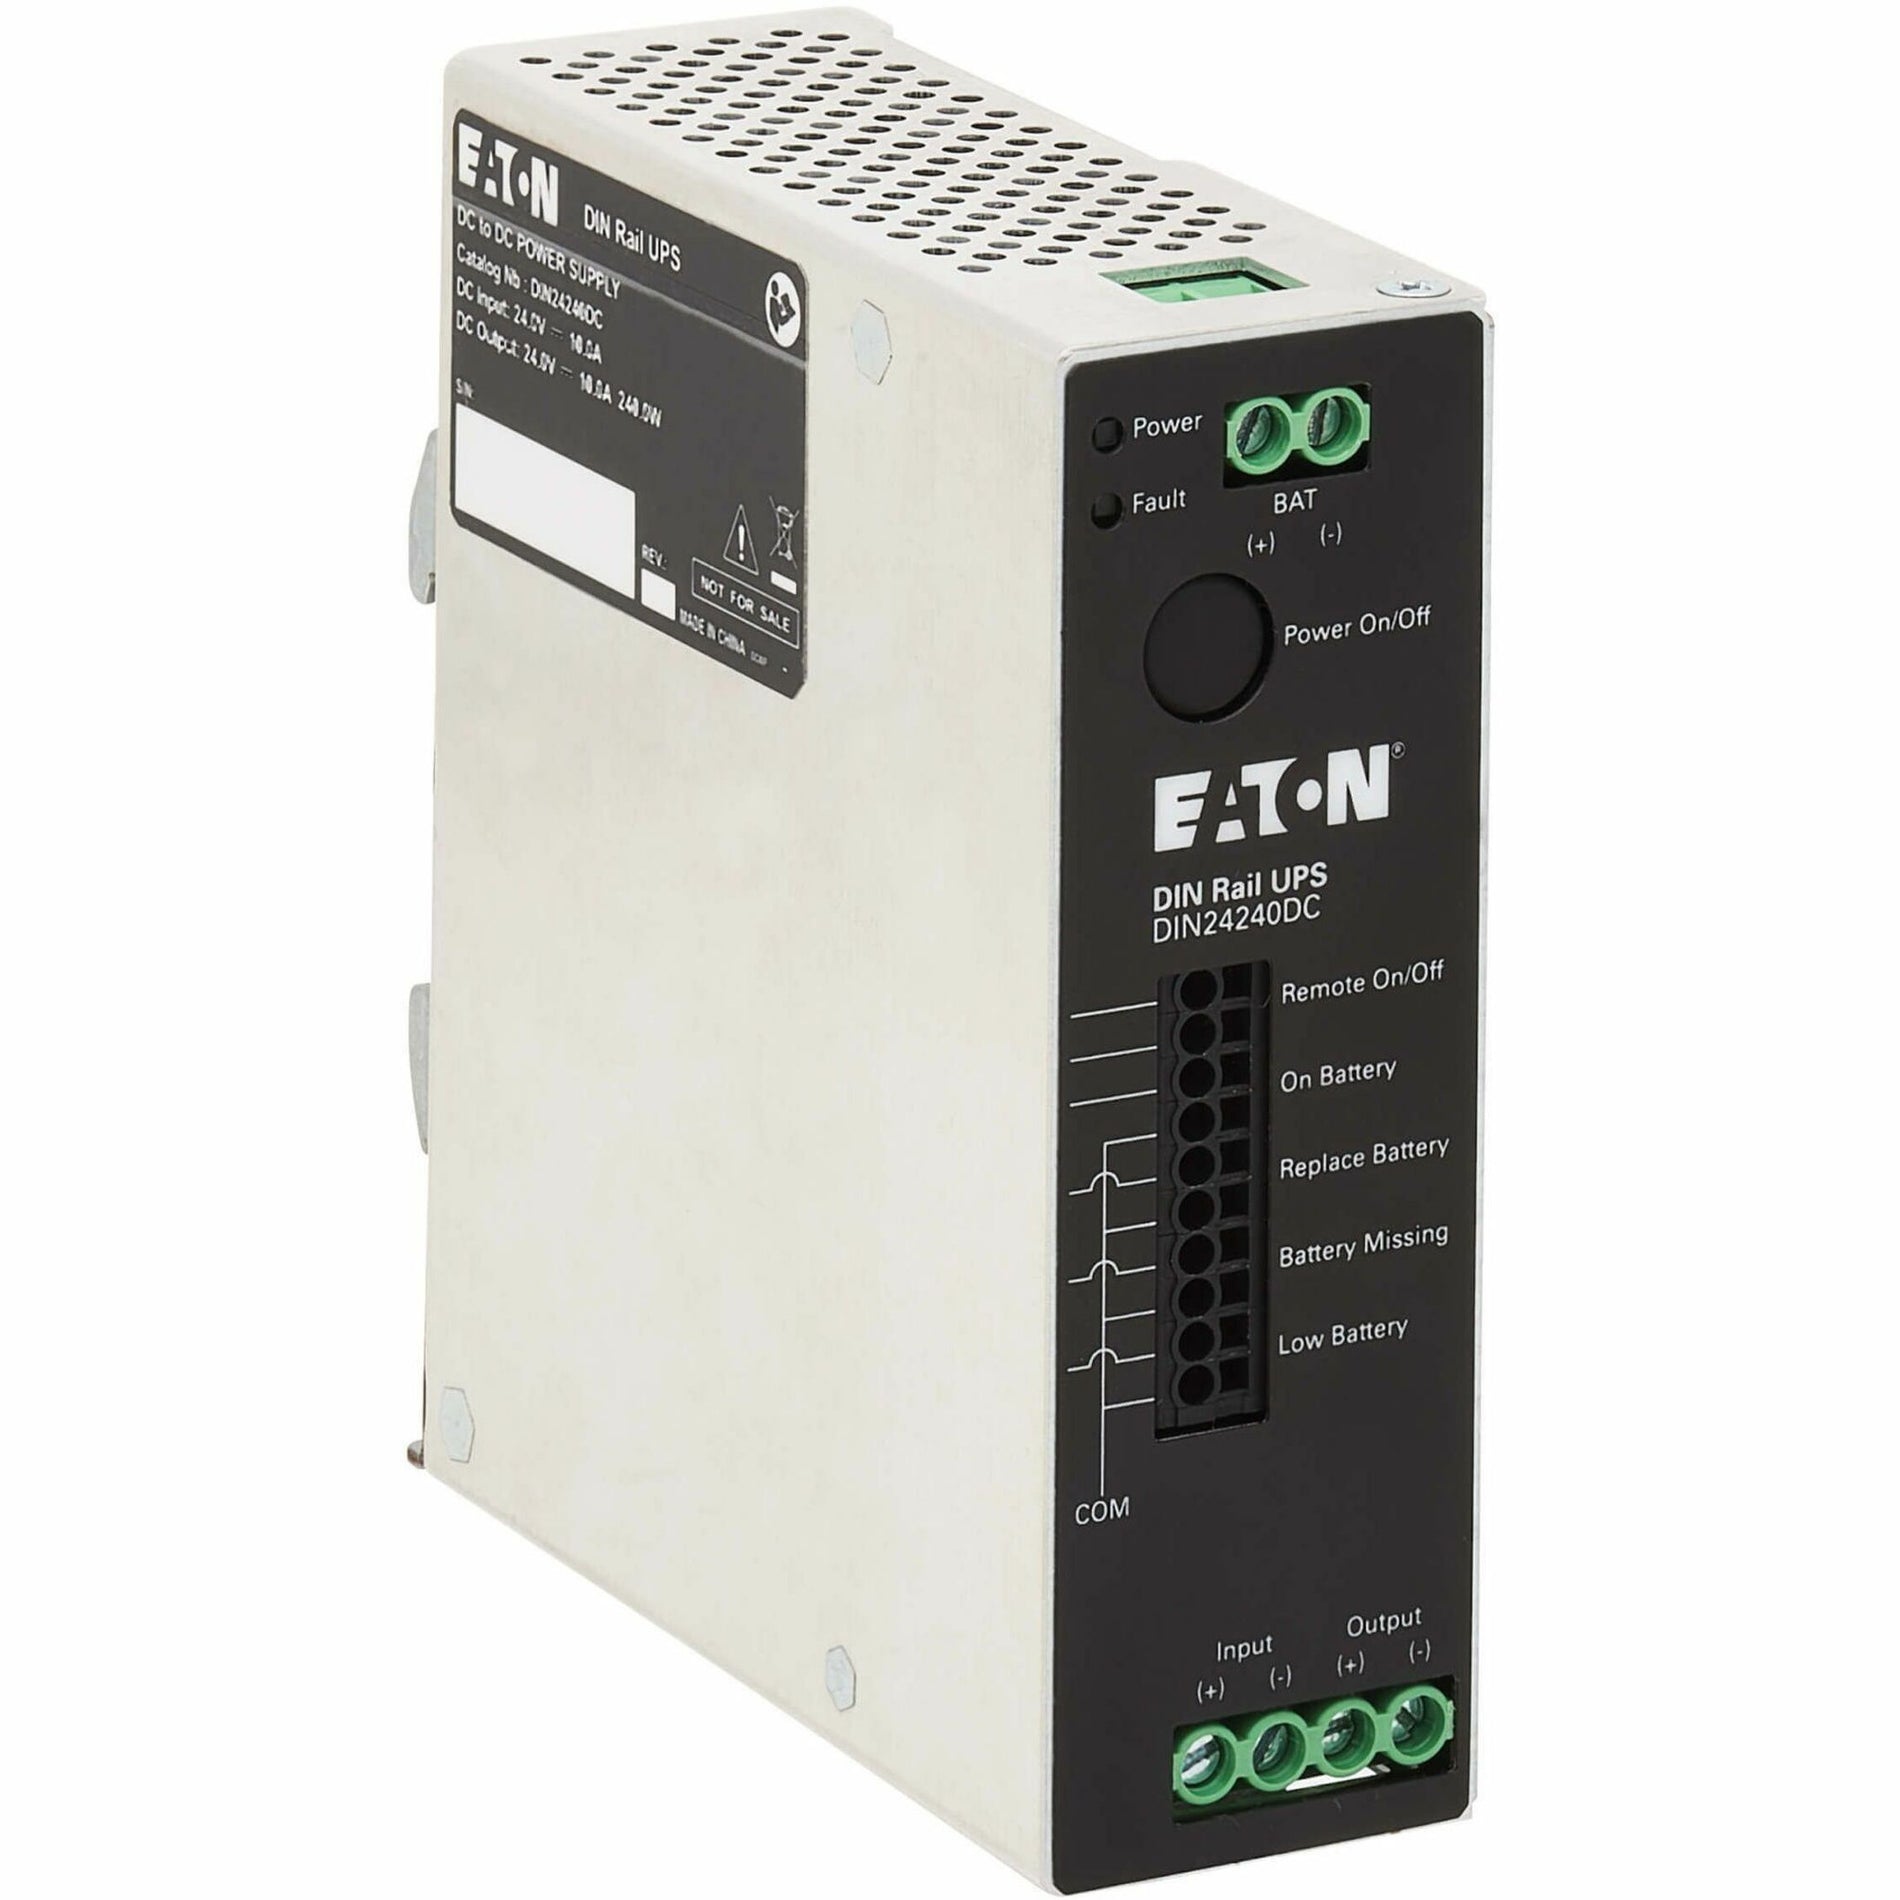 Eaton DIN24240DC General Purpose UPS, 240VA DIN Rail UPS, 24V DC Input/Output